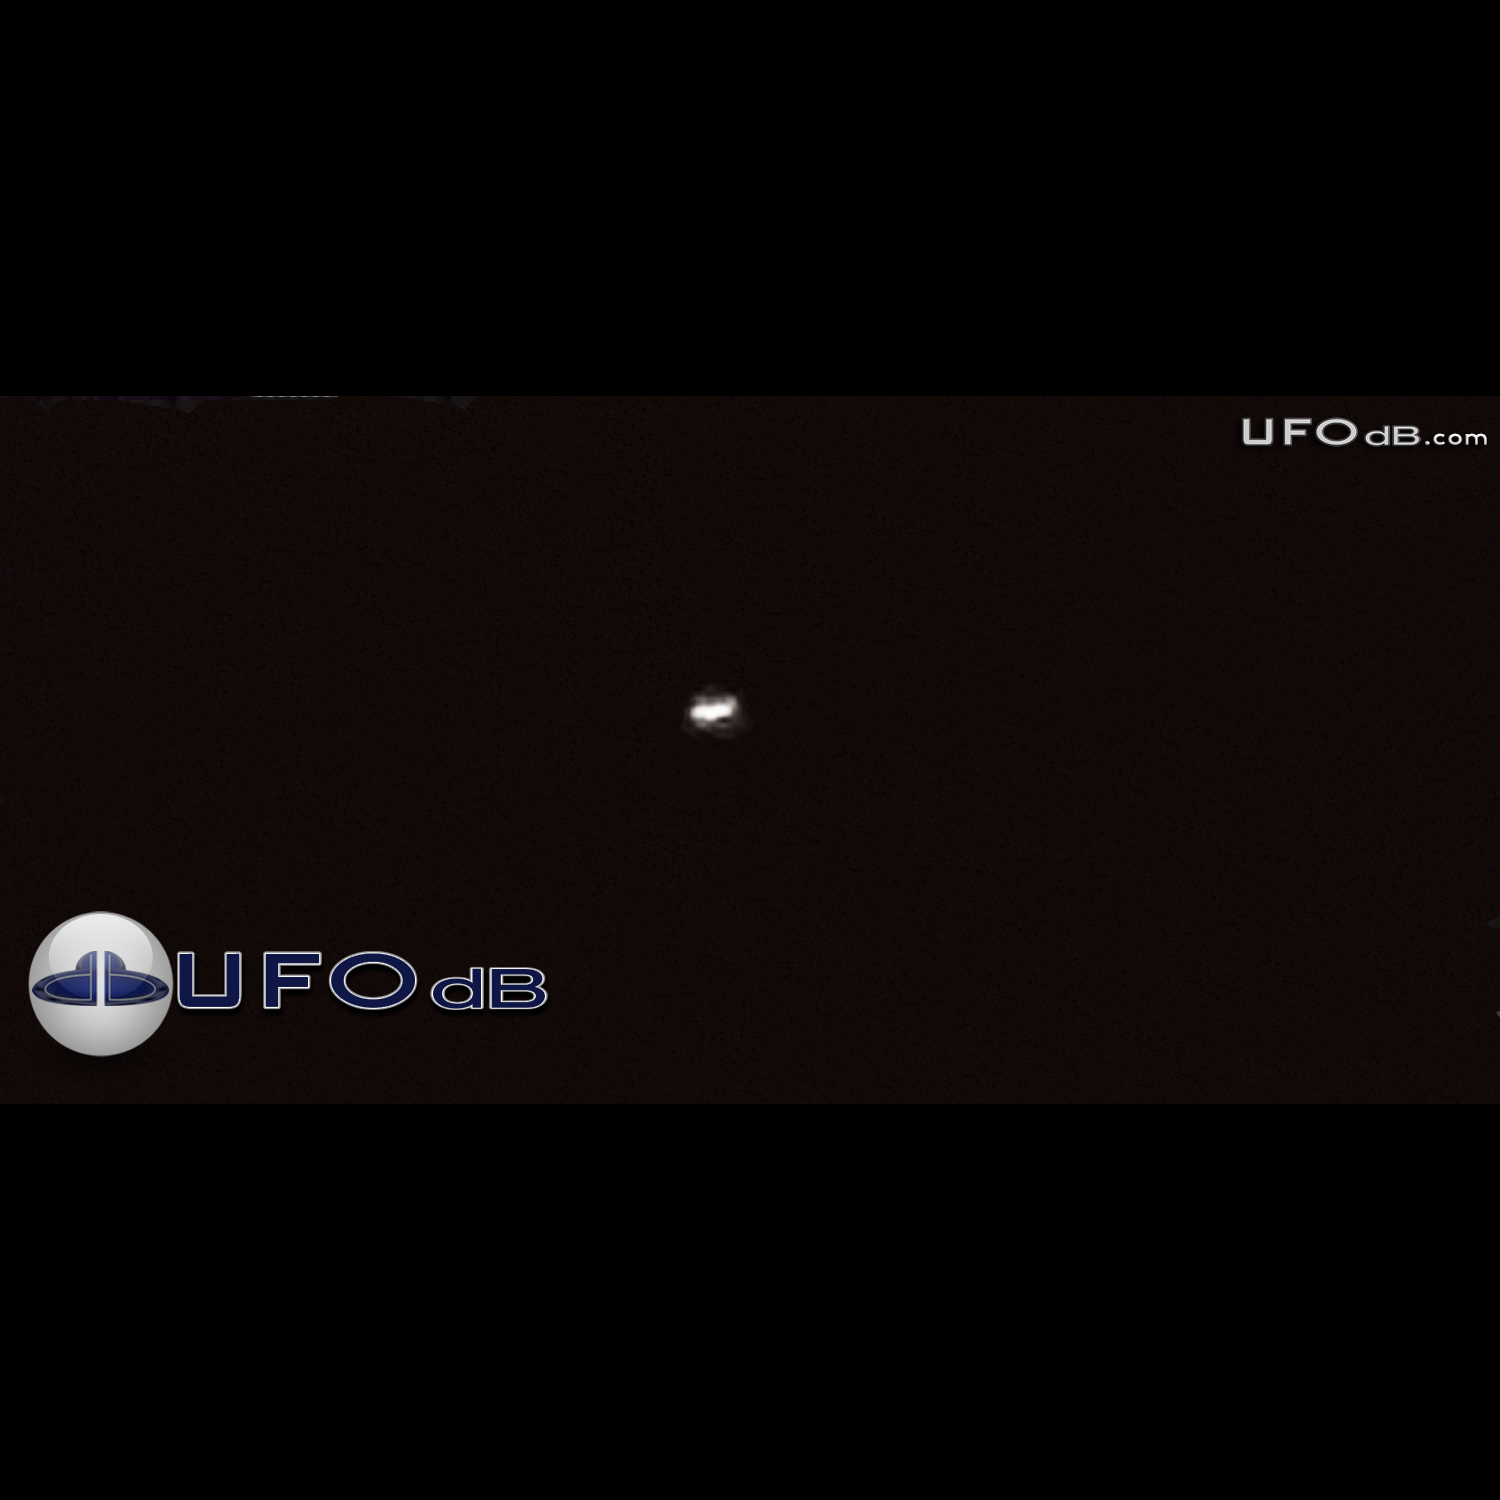 Couple walking home see Orange Ball UFO | Illinois USA | April 9 2011 UFO Picture #333-1